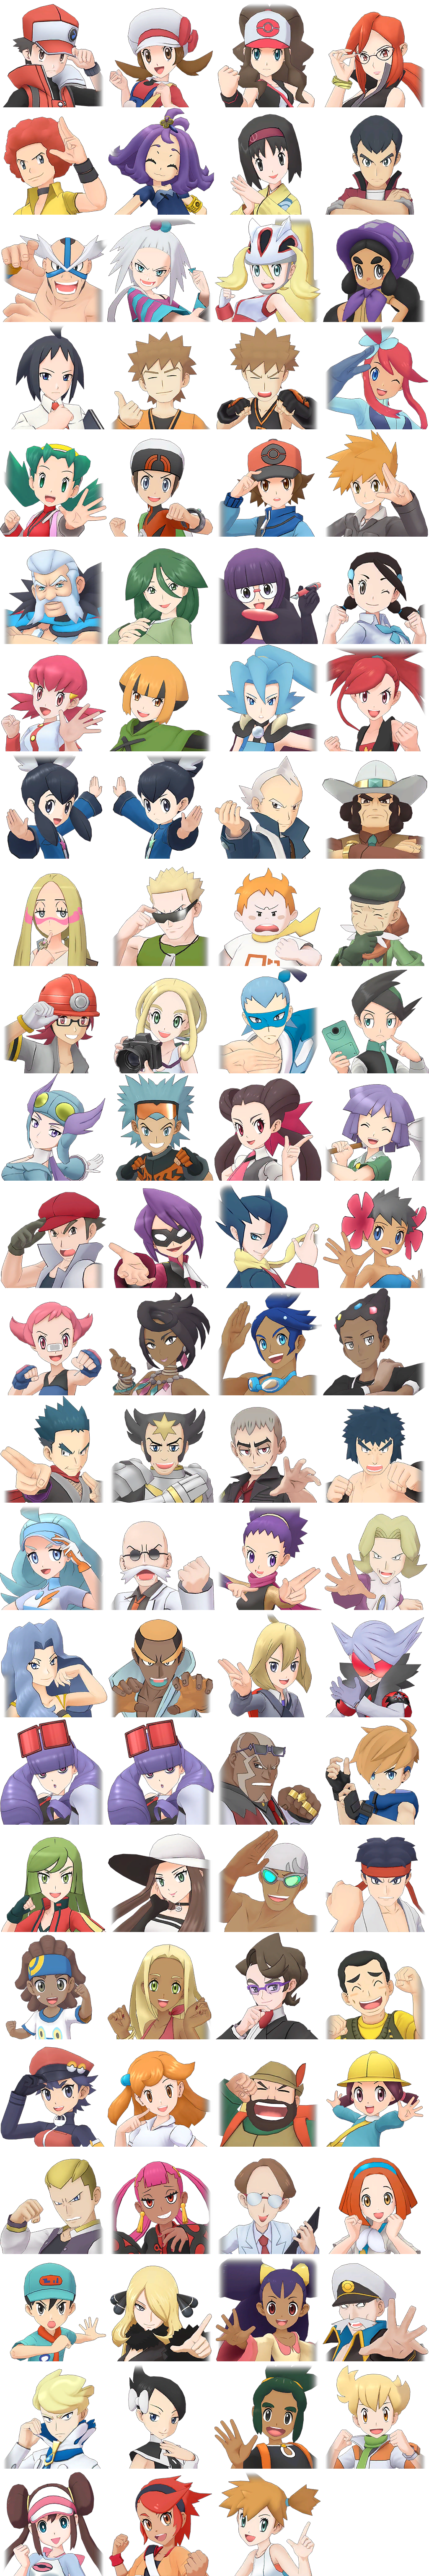 Pokémon Masters - Trainer Icons (Battle)